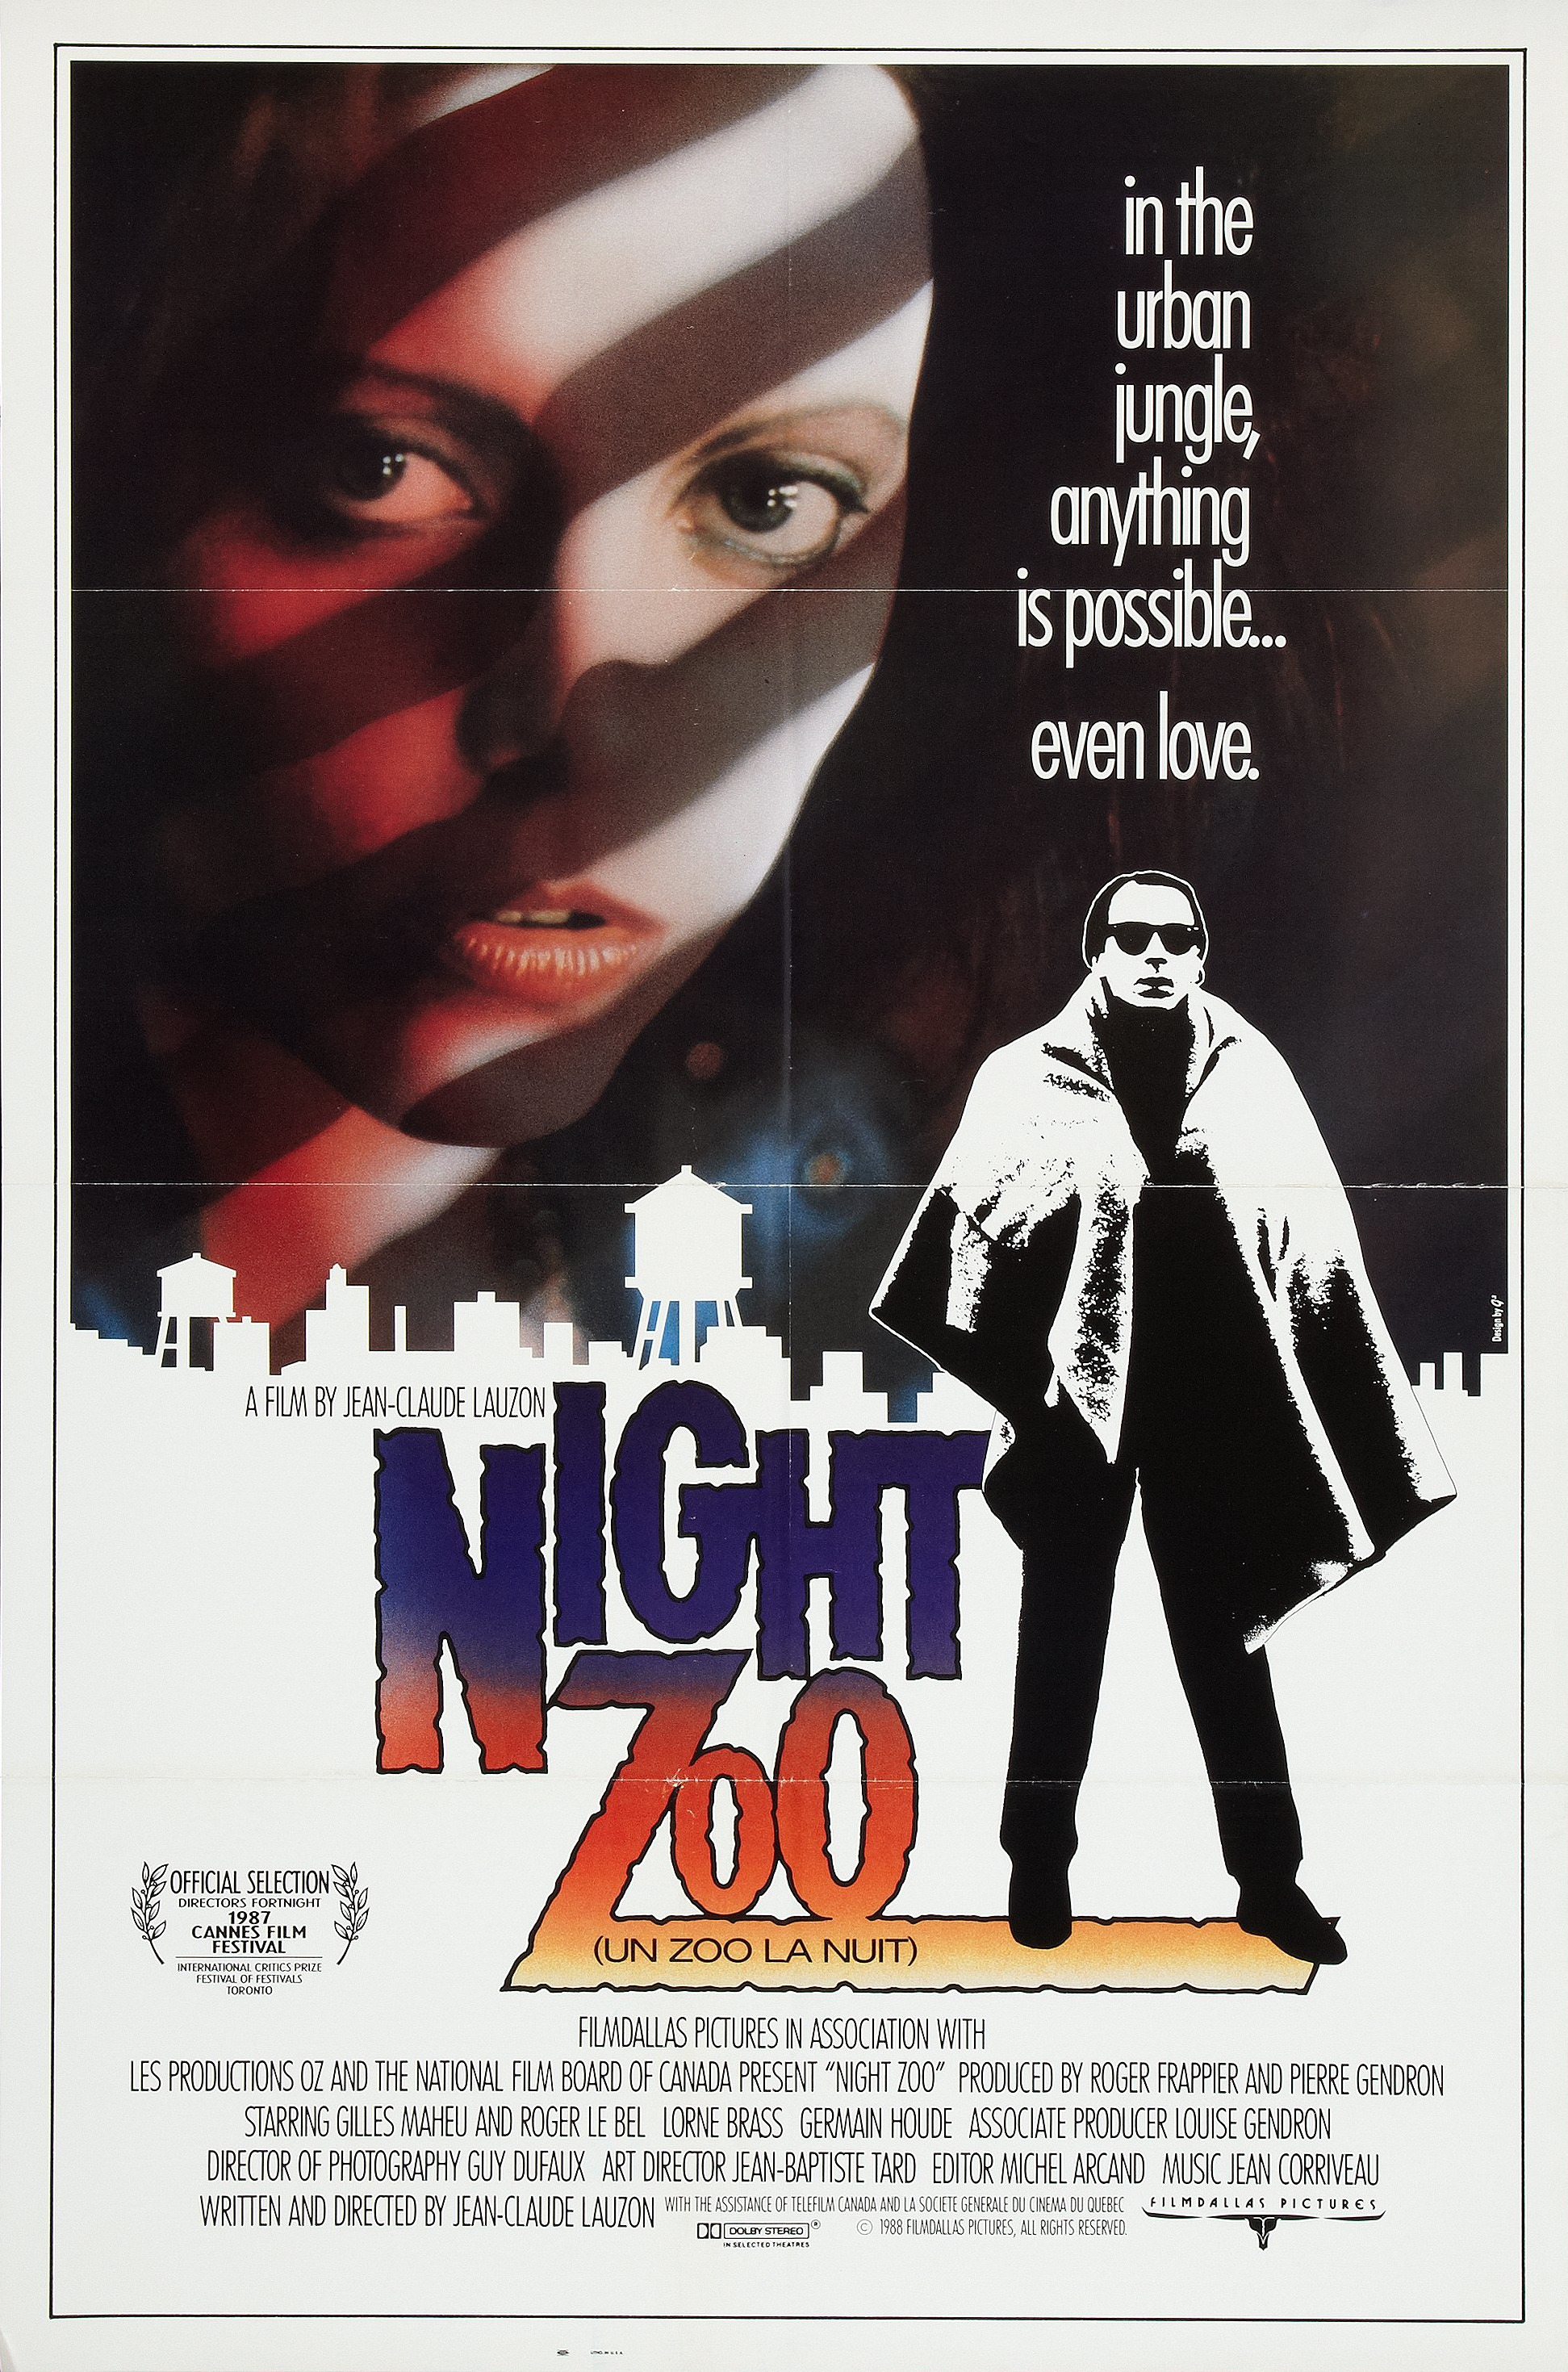 Mega Sized Movie Poster Image for Un zoo la nuit (#2 of 2)